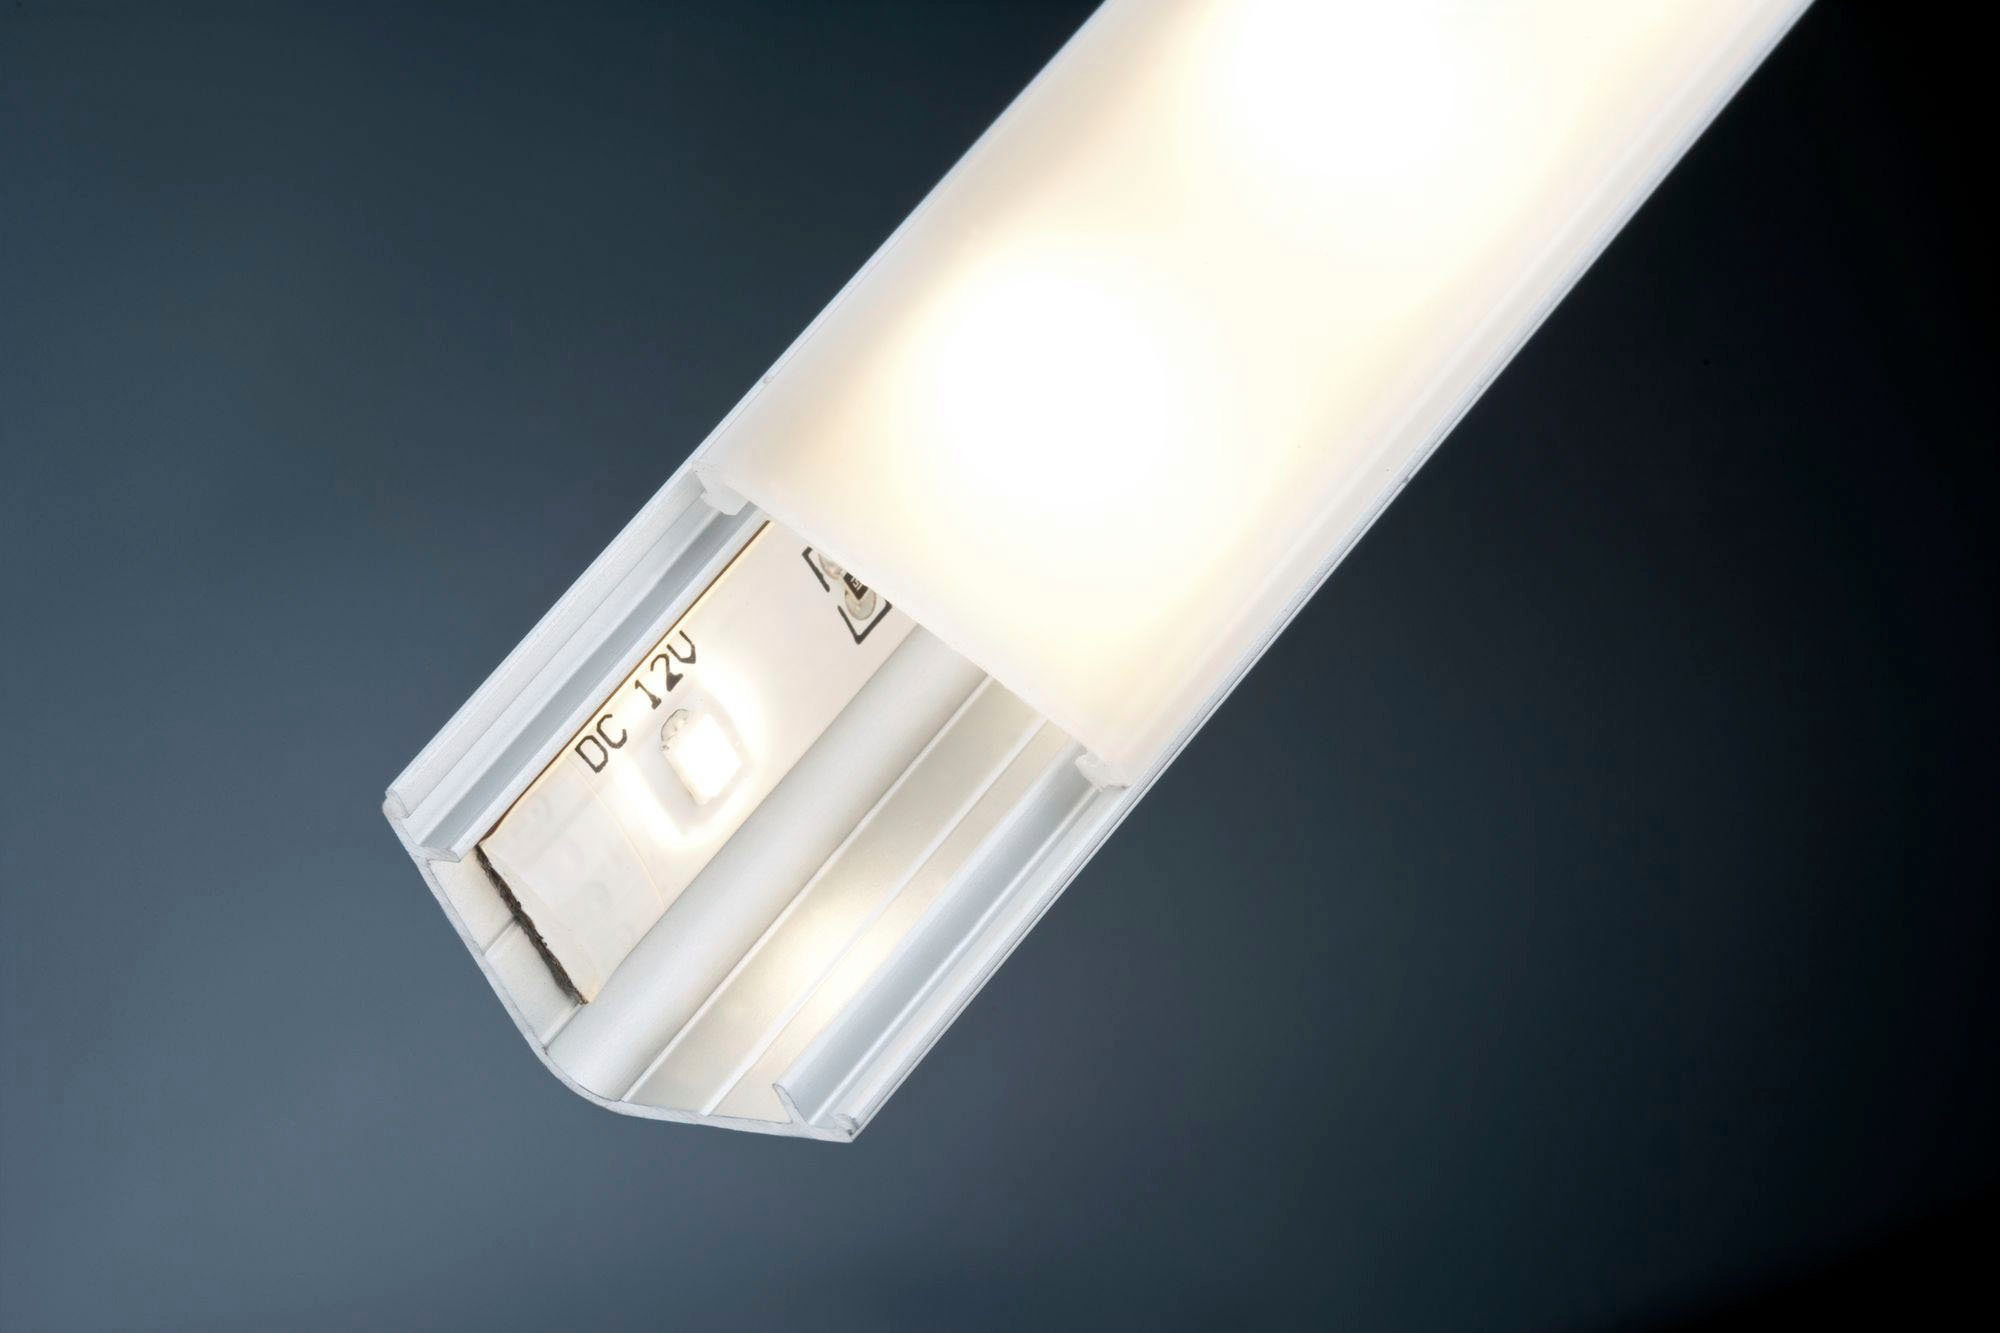 Diffusor eloxiert, Alu Paulmann Satin, Profil Alu/Kunststoff Delta LED-Streifen 1m mit